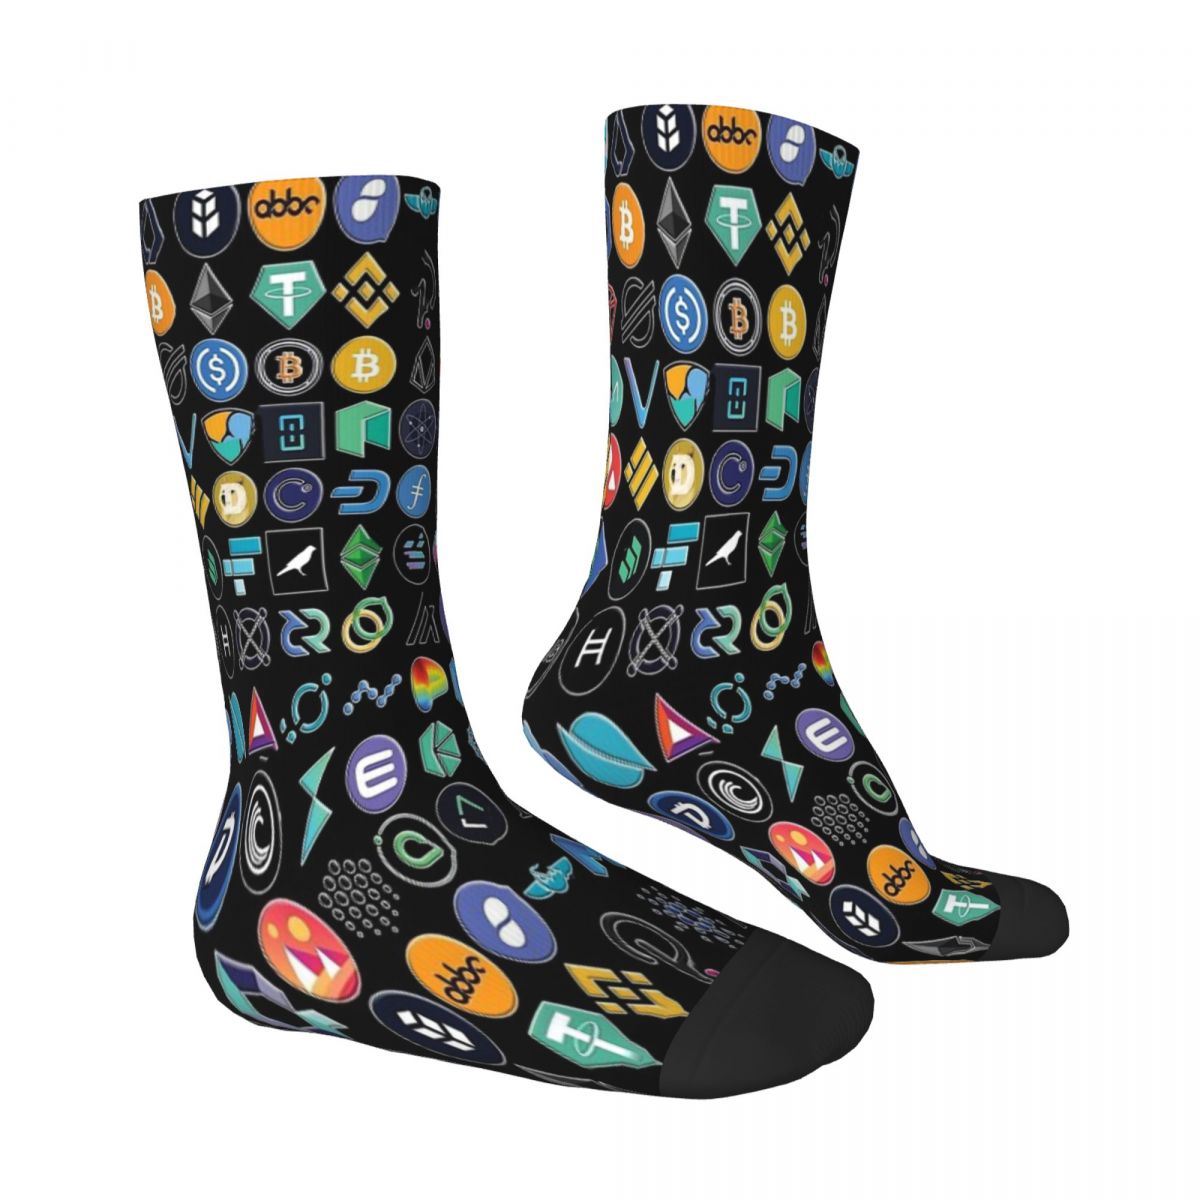 Socks crypto-themed socks cryptocurrency socks